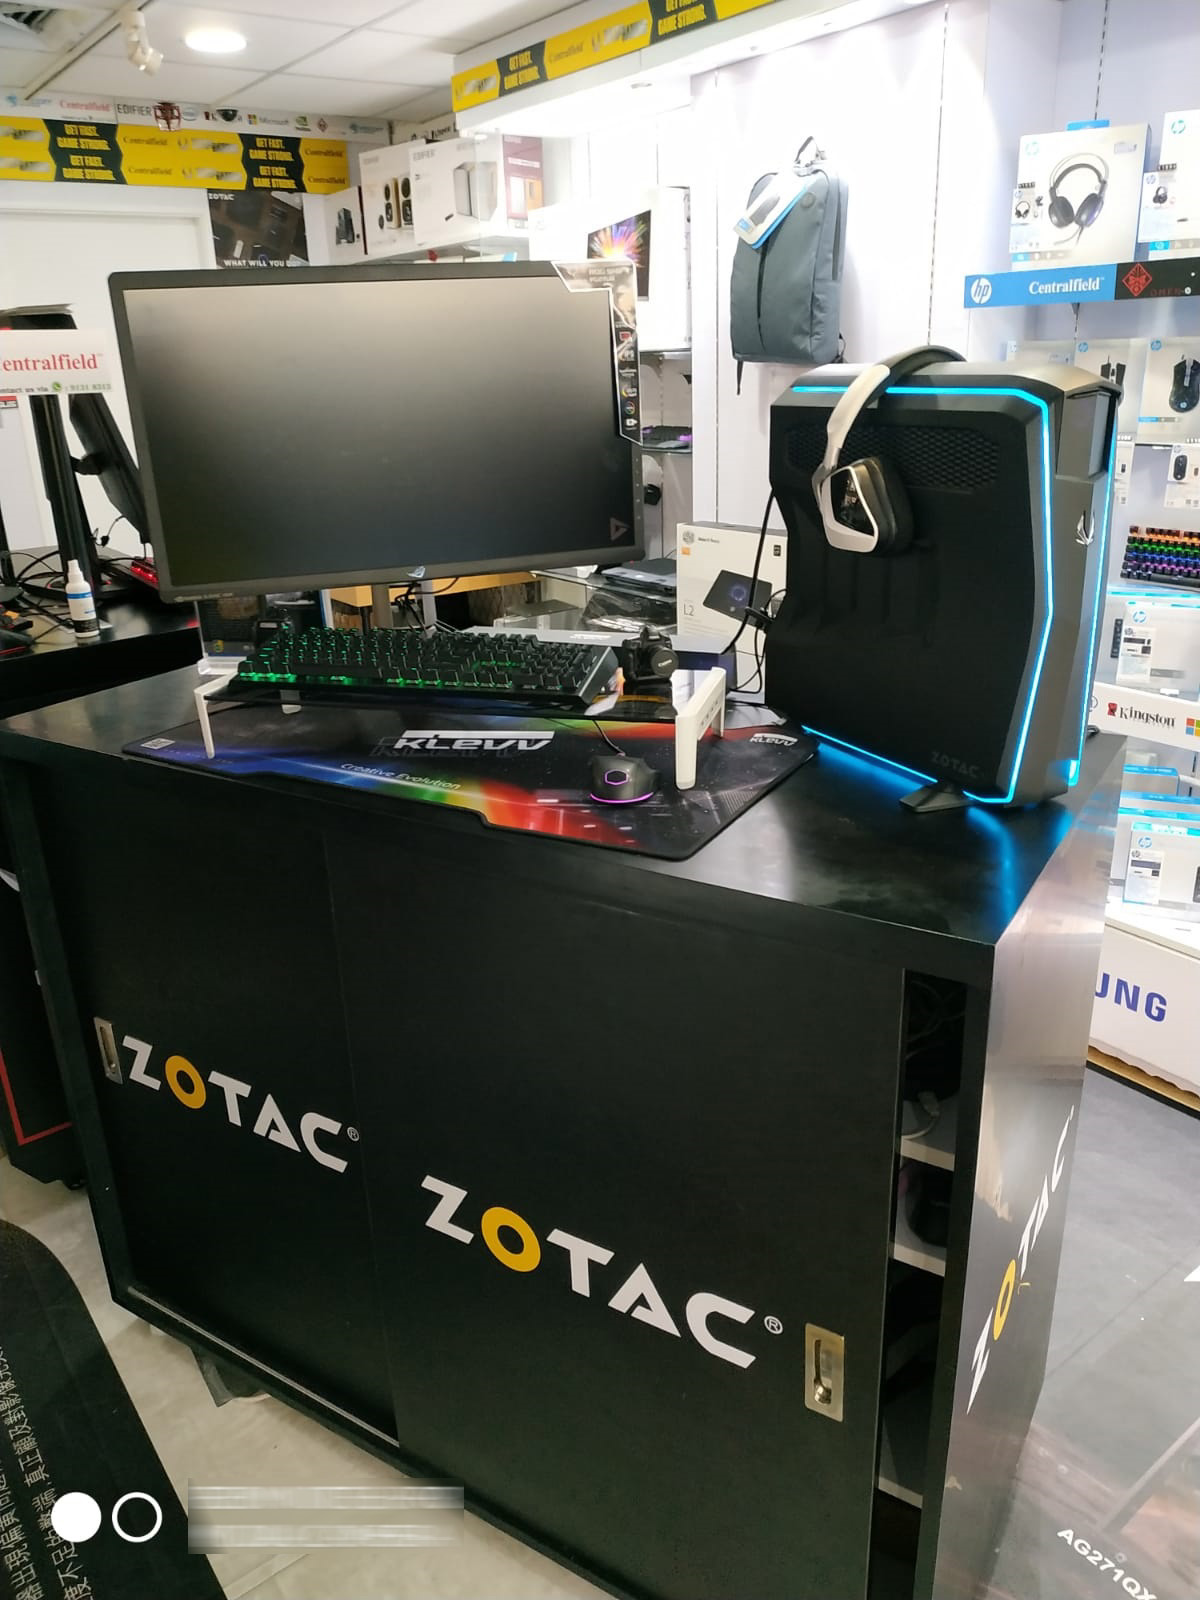 Zotac Mini PC Show Room